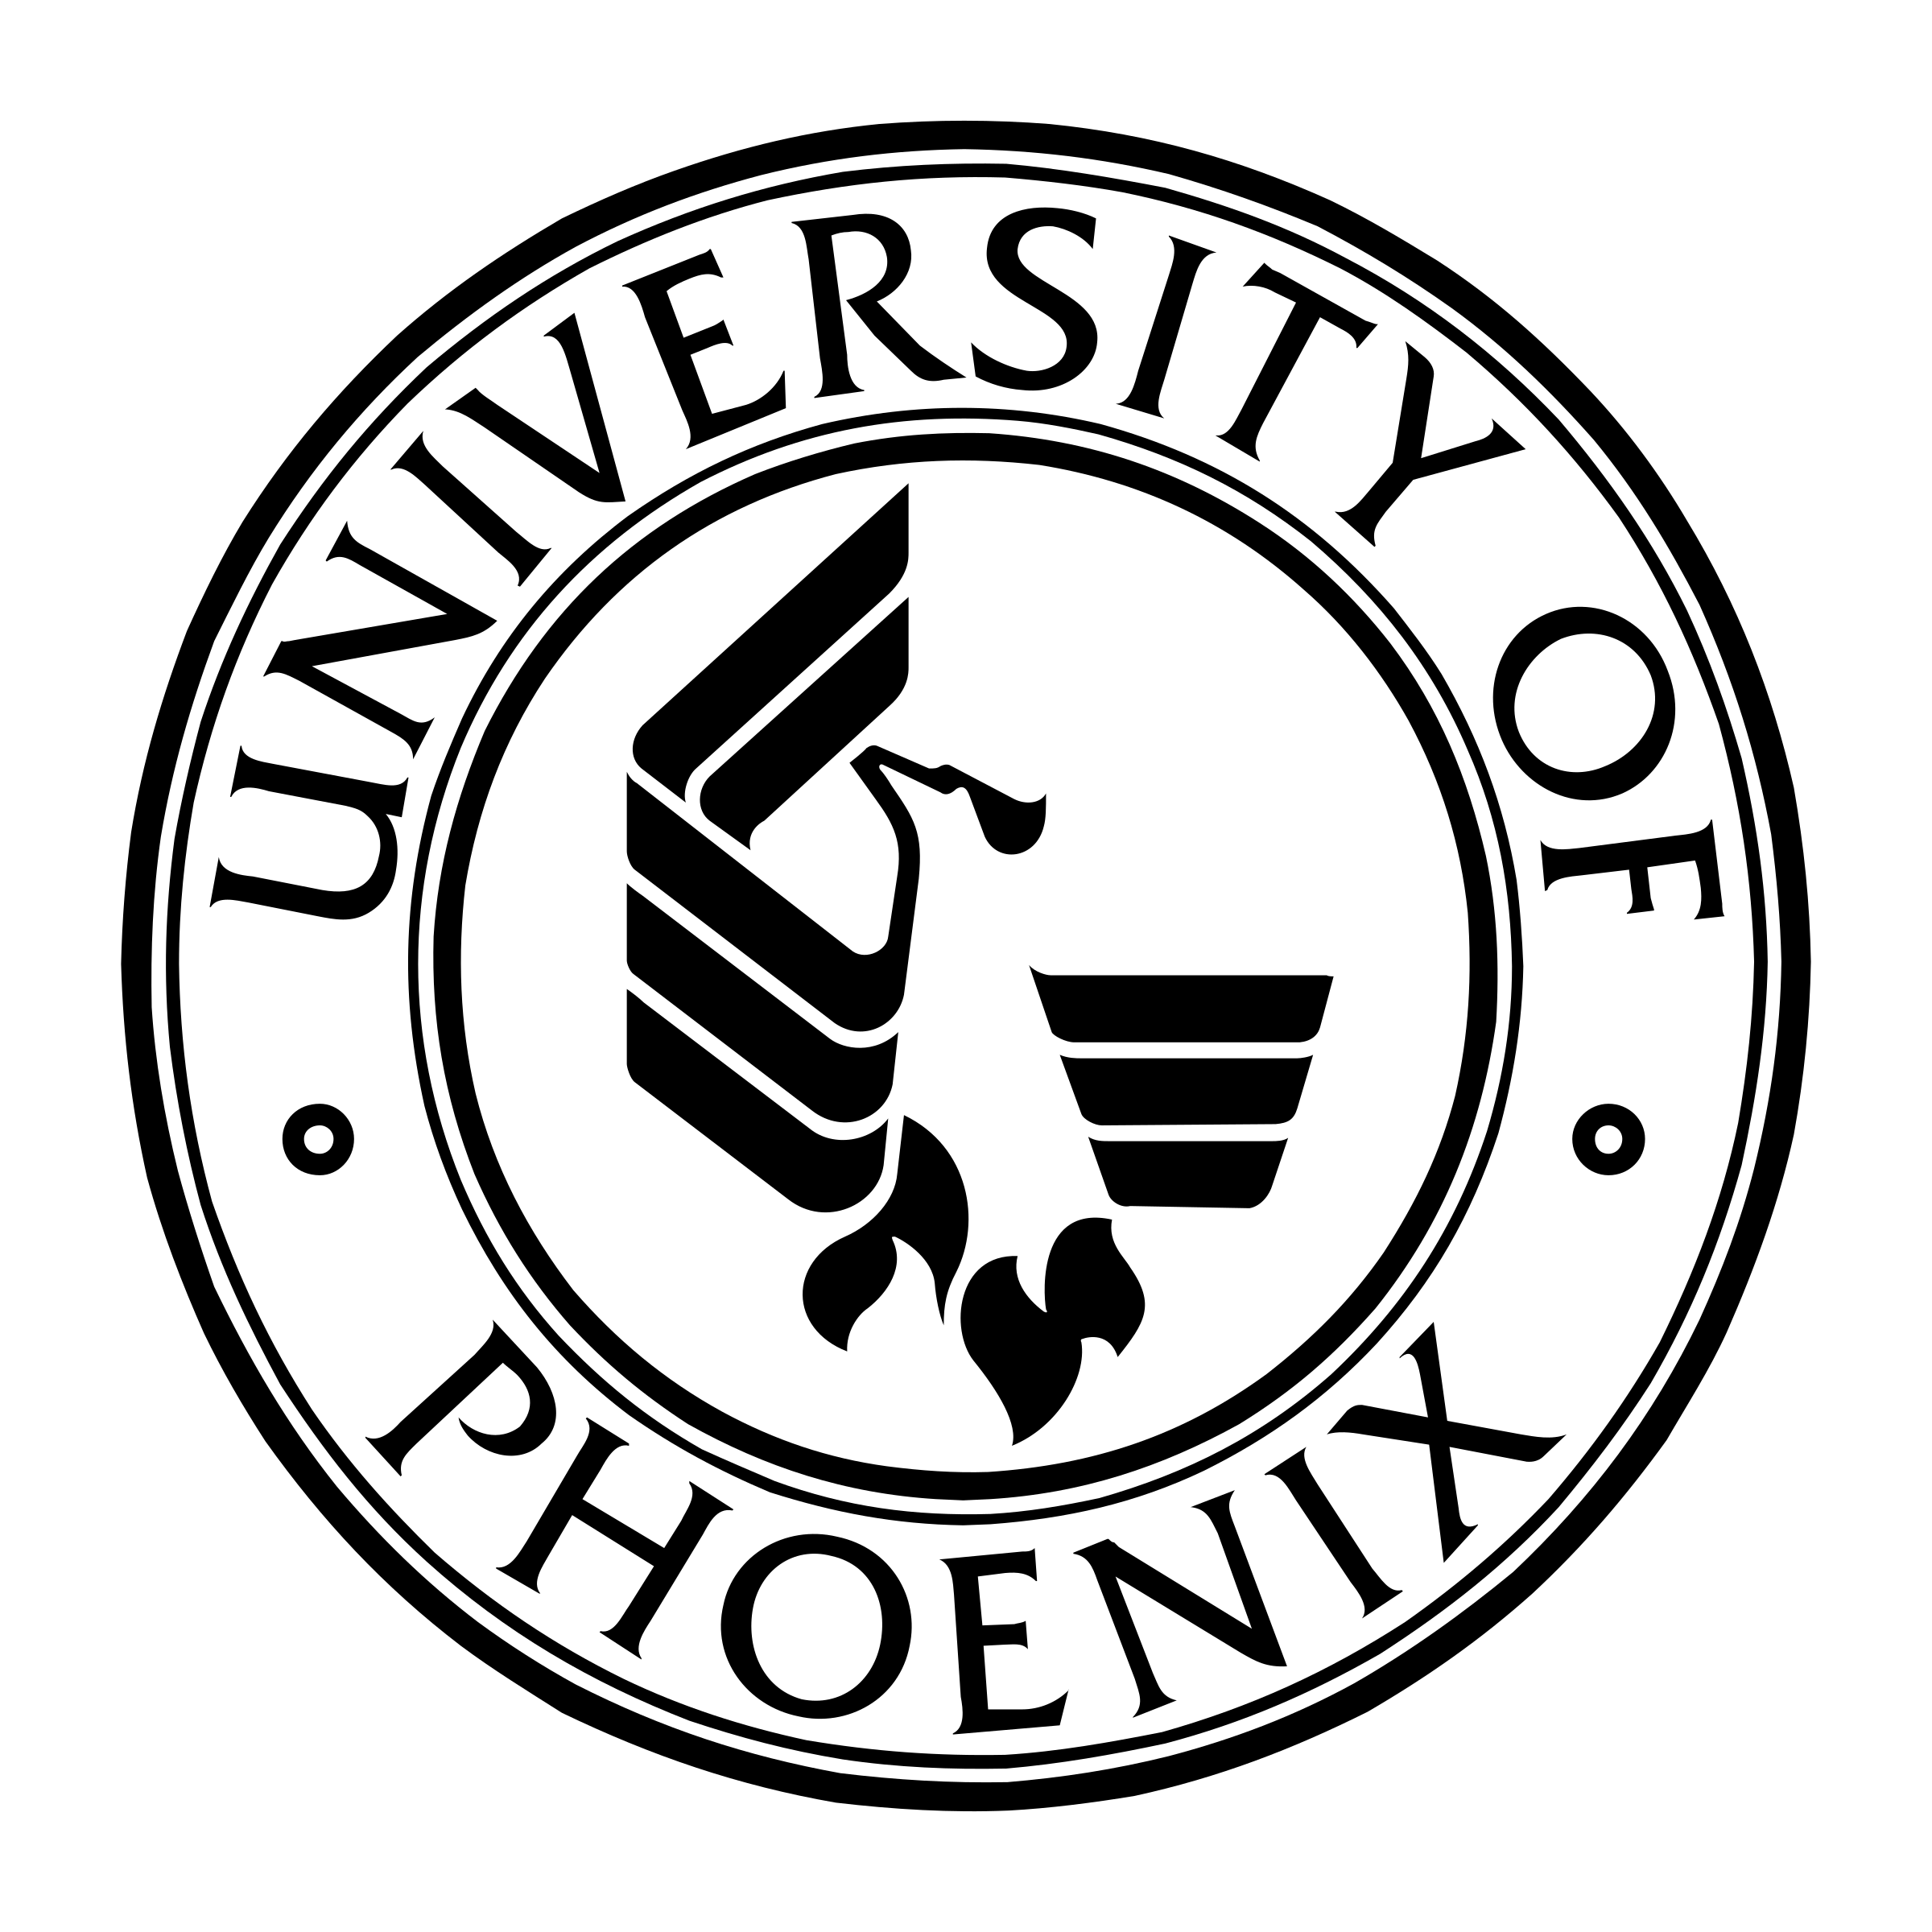 UOPX Logo - University of Phoenix Logo PNG Transparent & SVG Vector